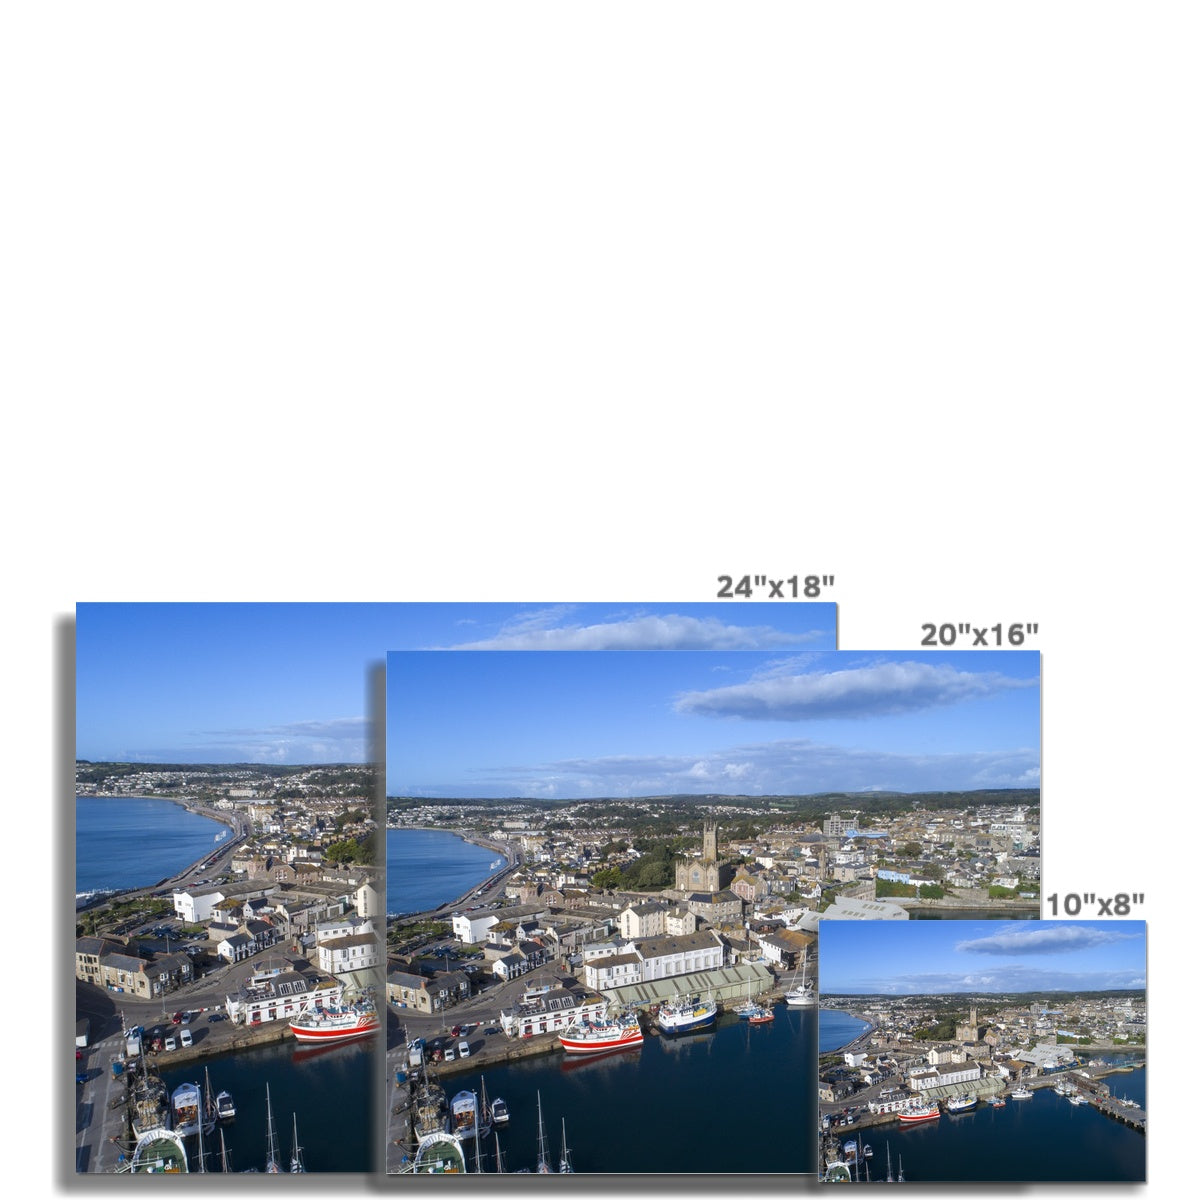 penzance harbour picture sizes